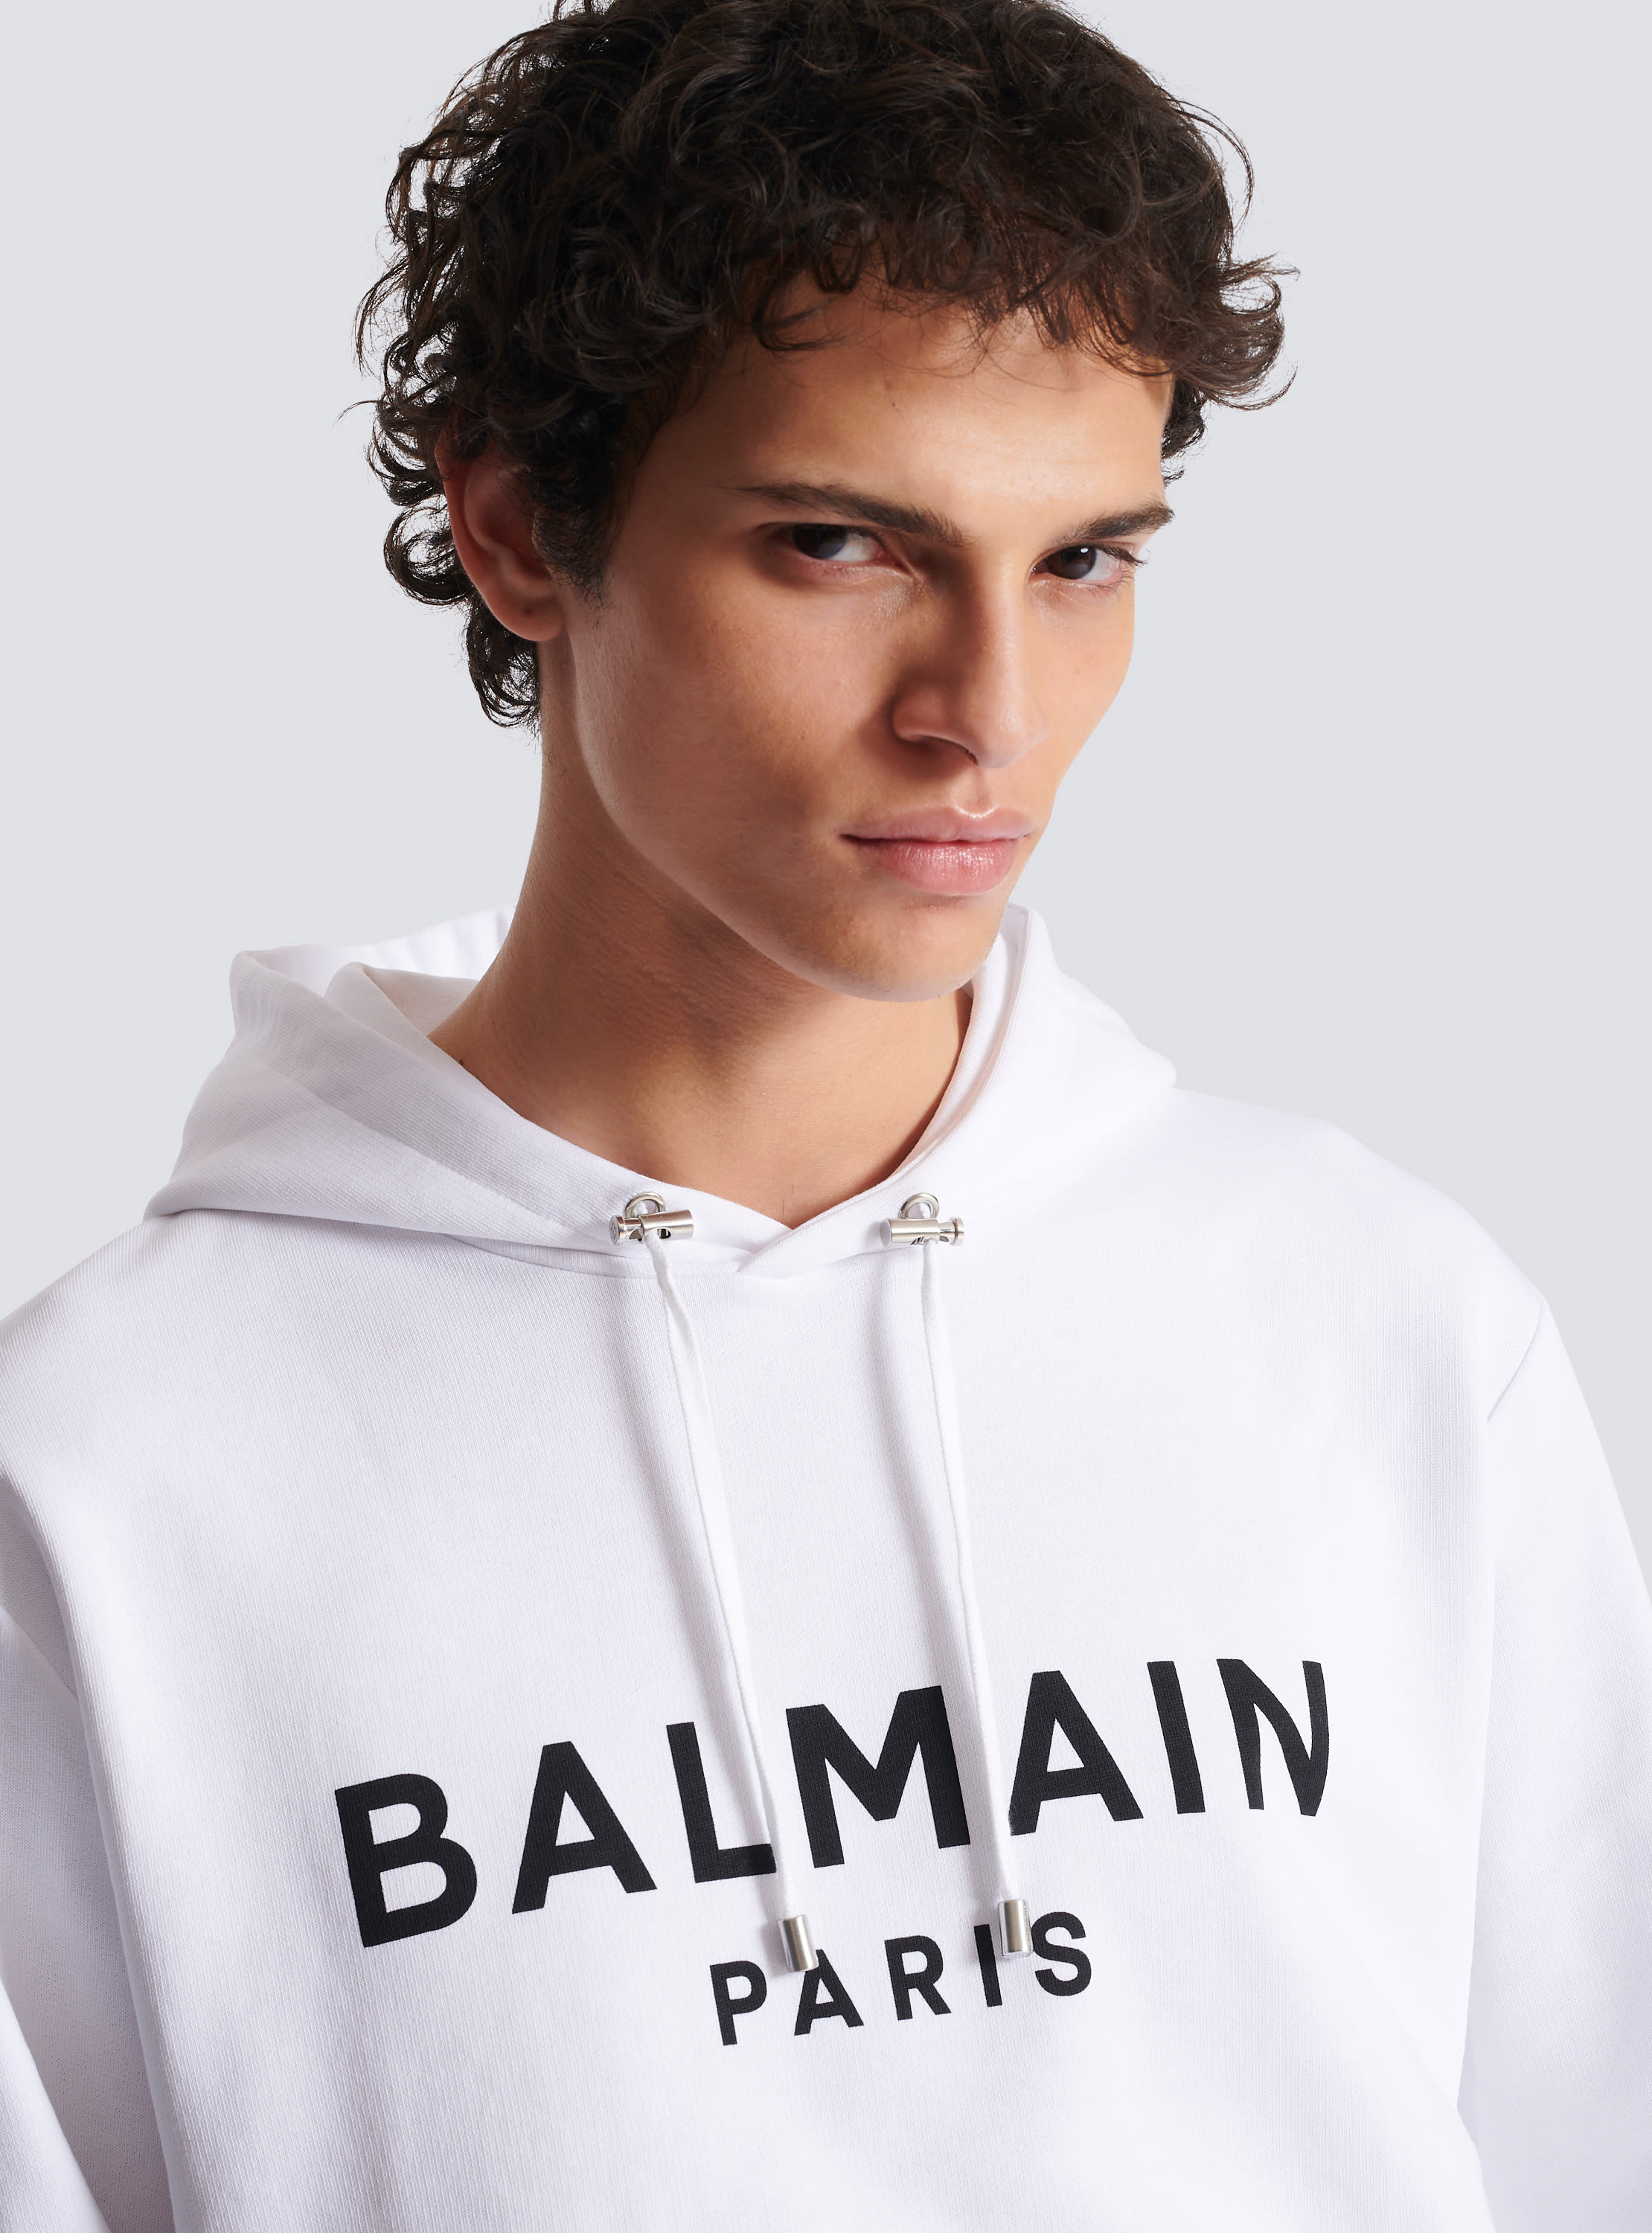 Balmain Paris hooded white - Men | BALMAIN